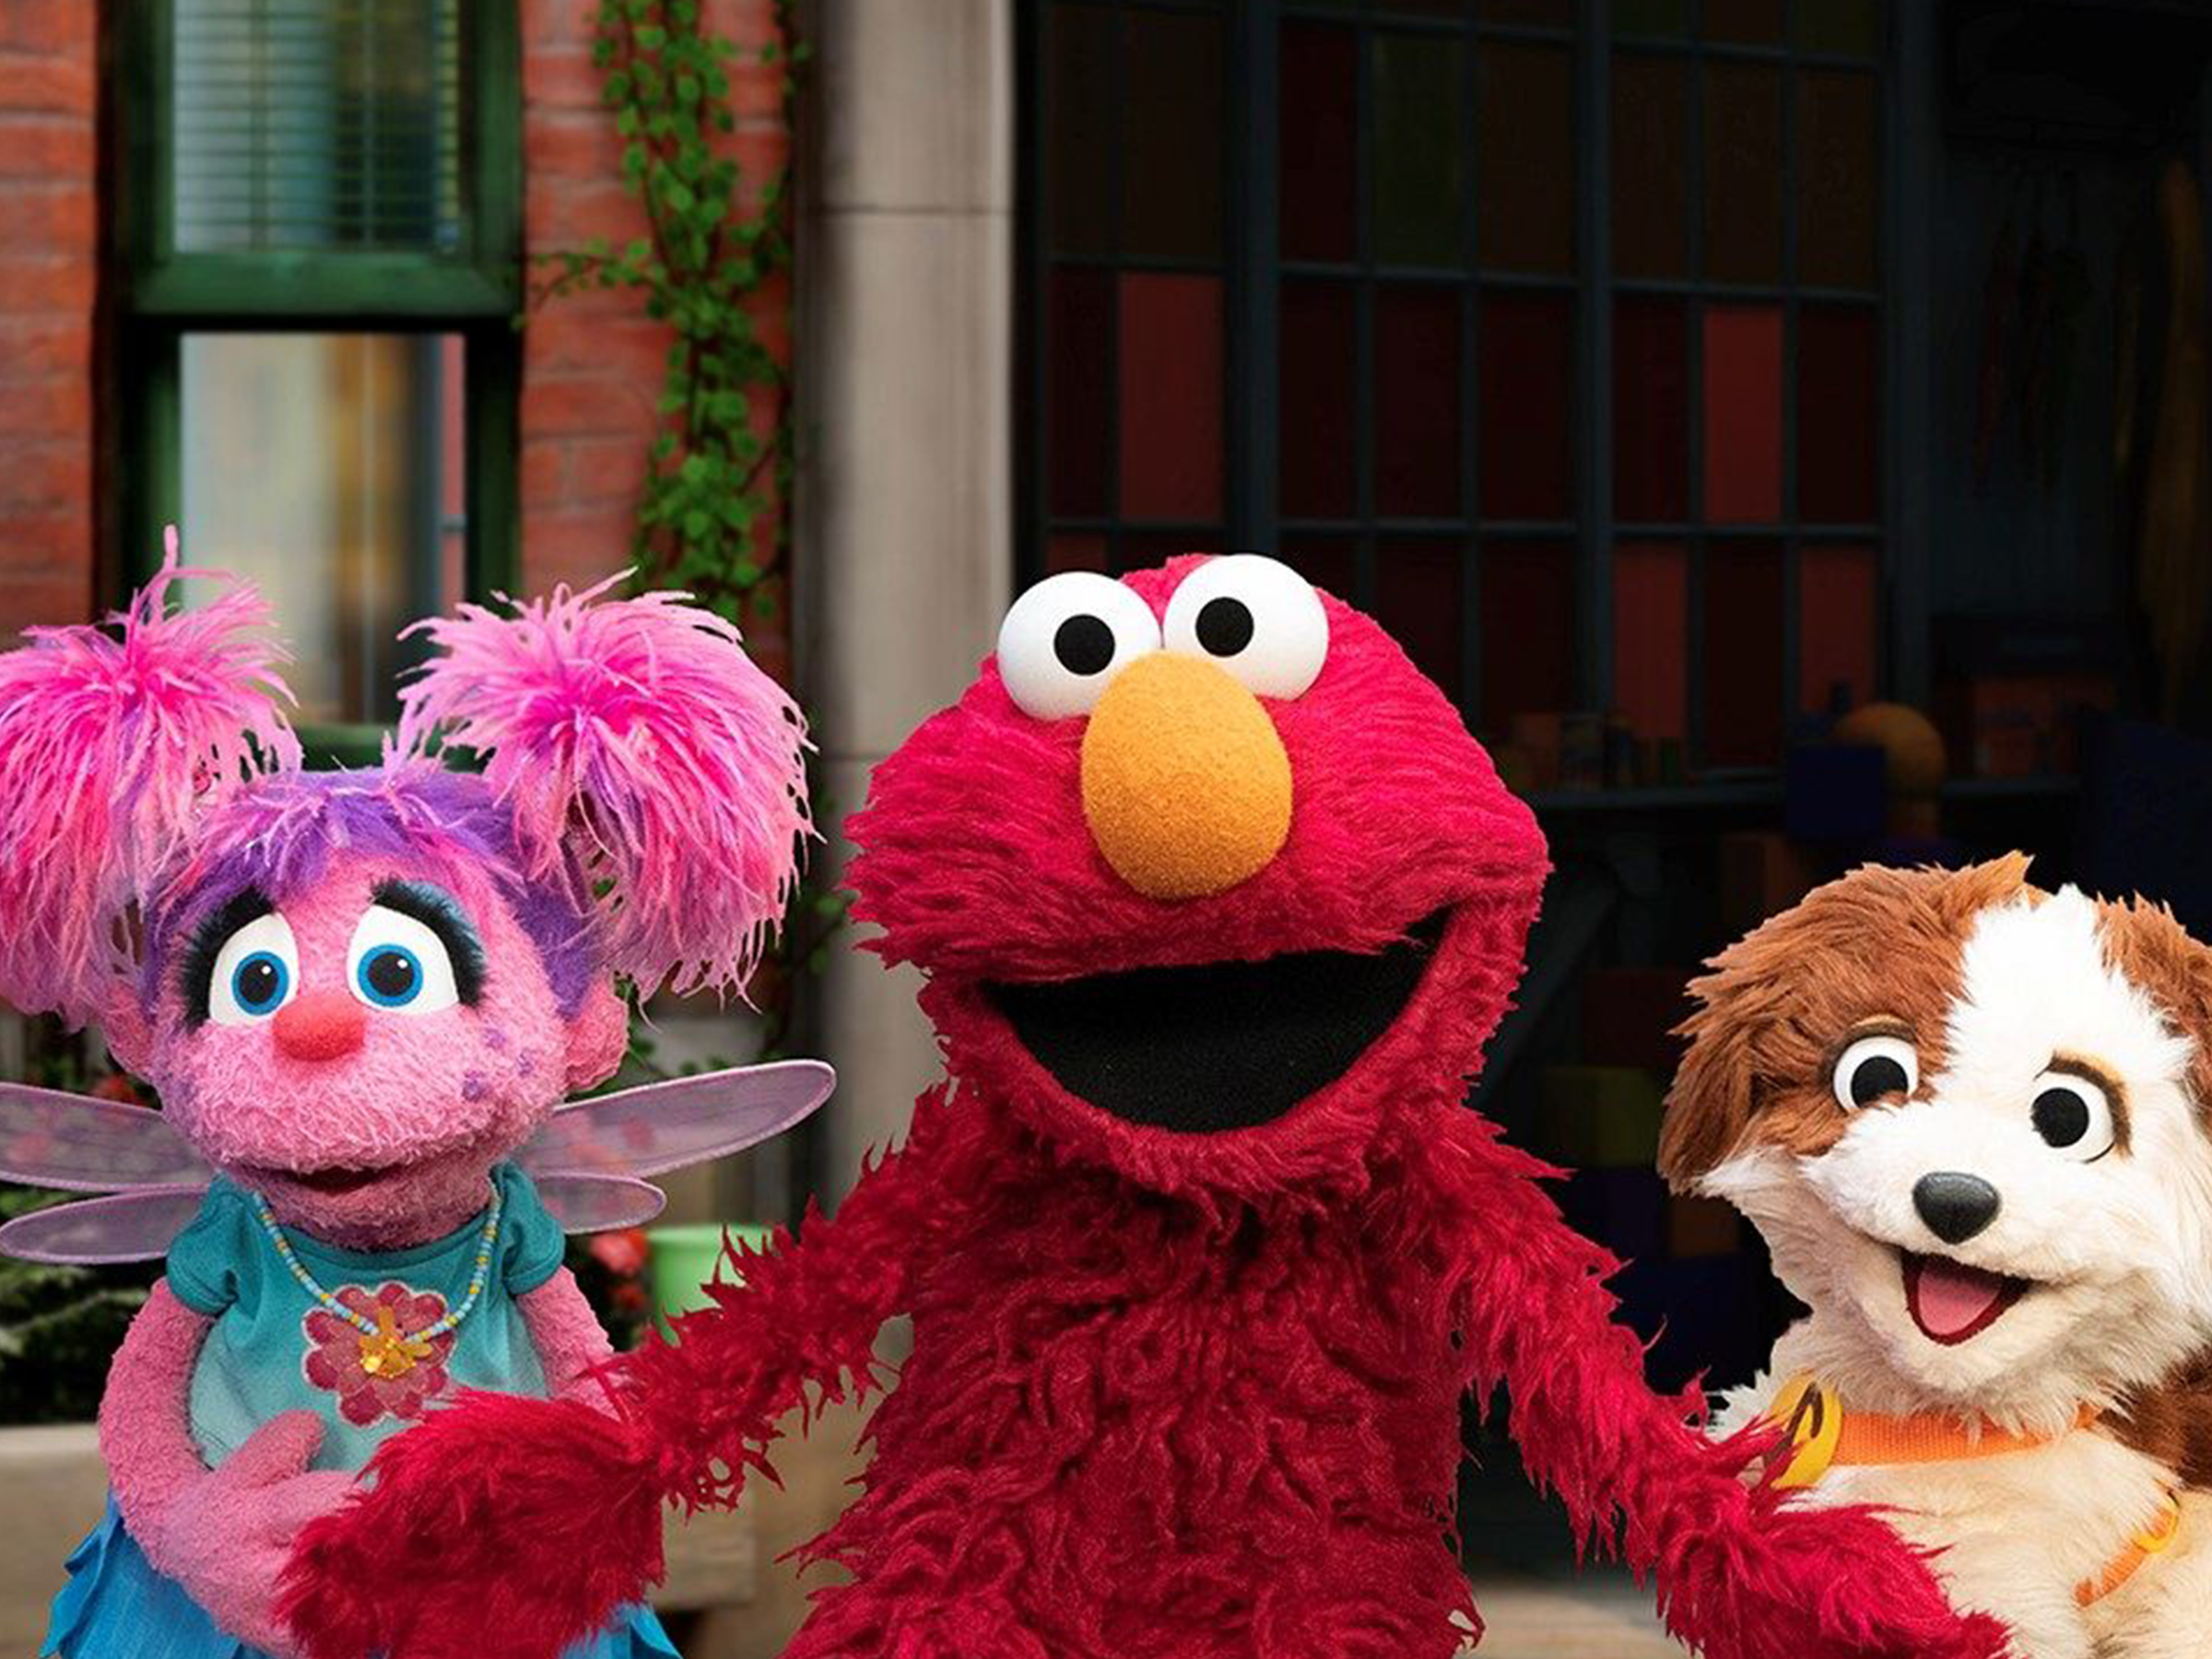 Elmo, Abby, and Tango smile and pose together